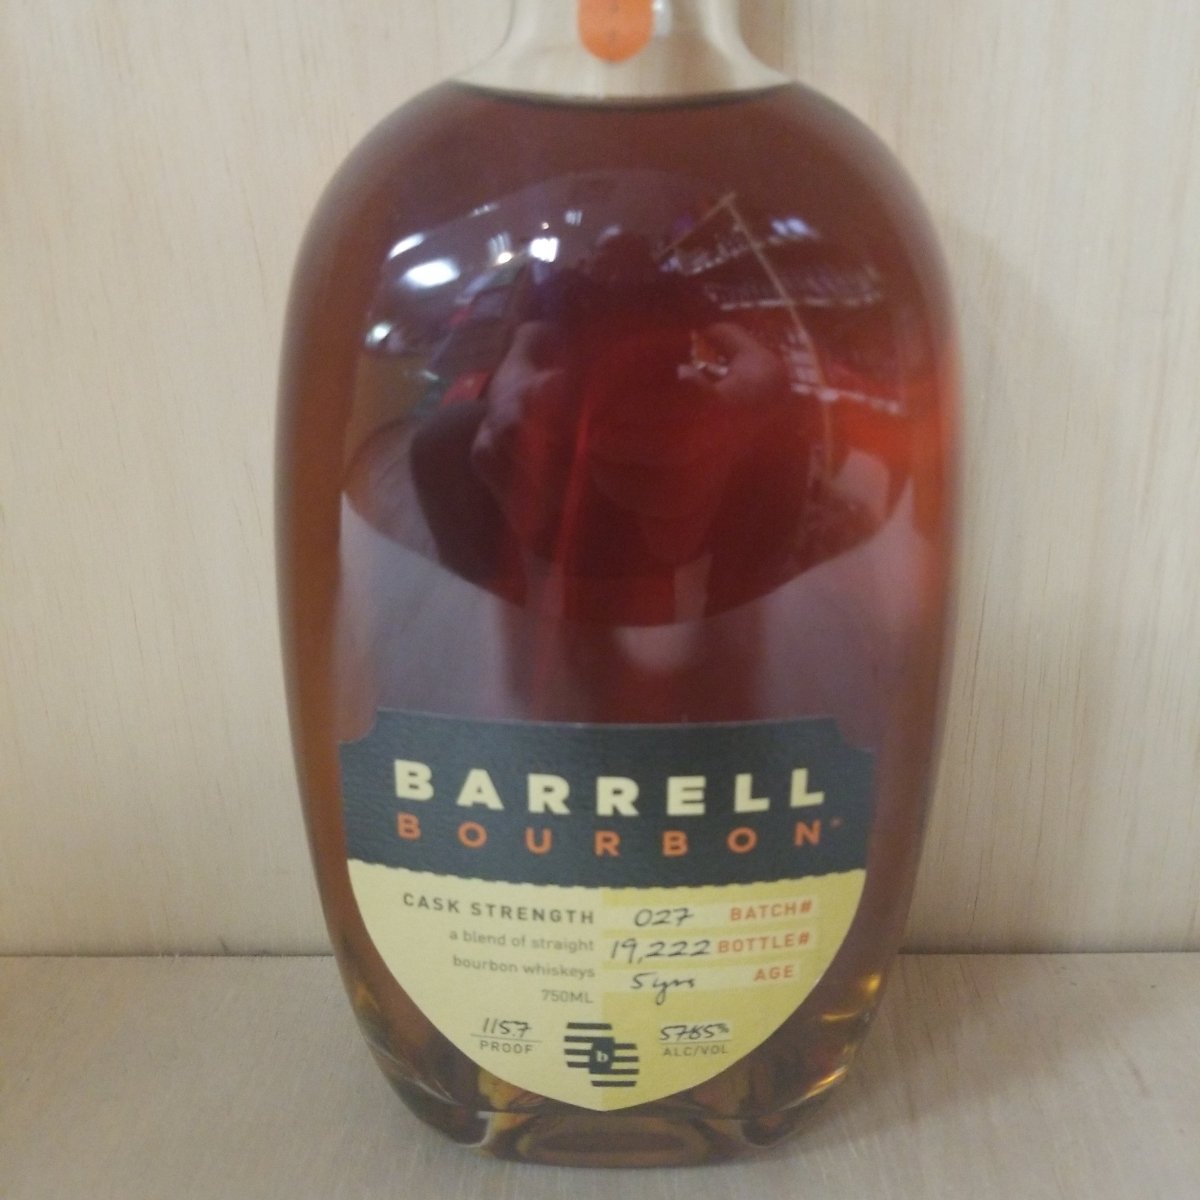 Barrell 5 Year Old Cask Strength Bourbon 750ml (Batch 27) - Sip & Say